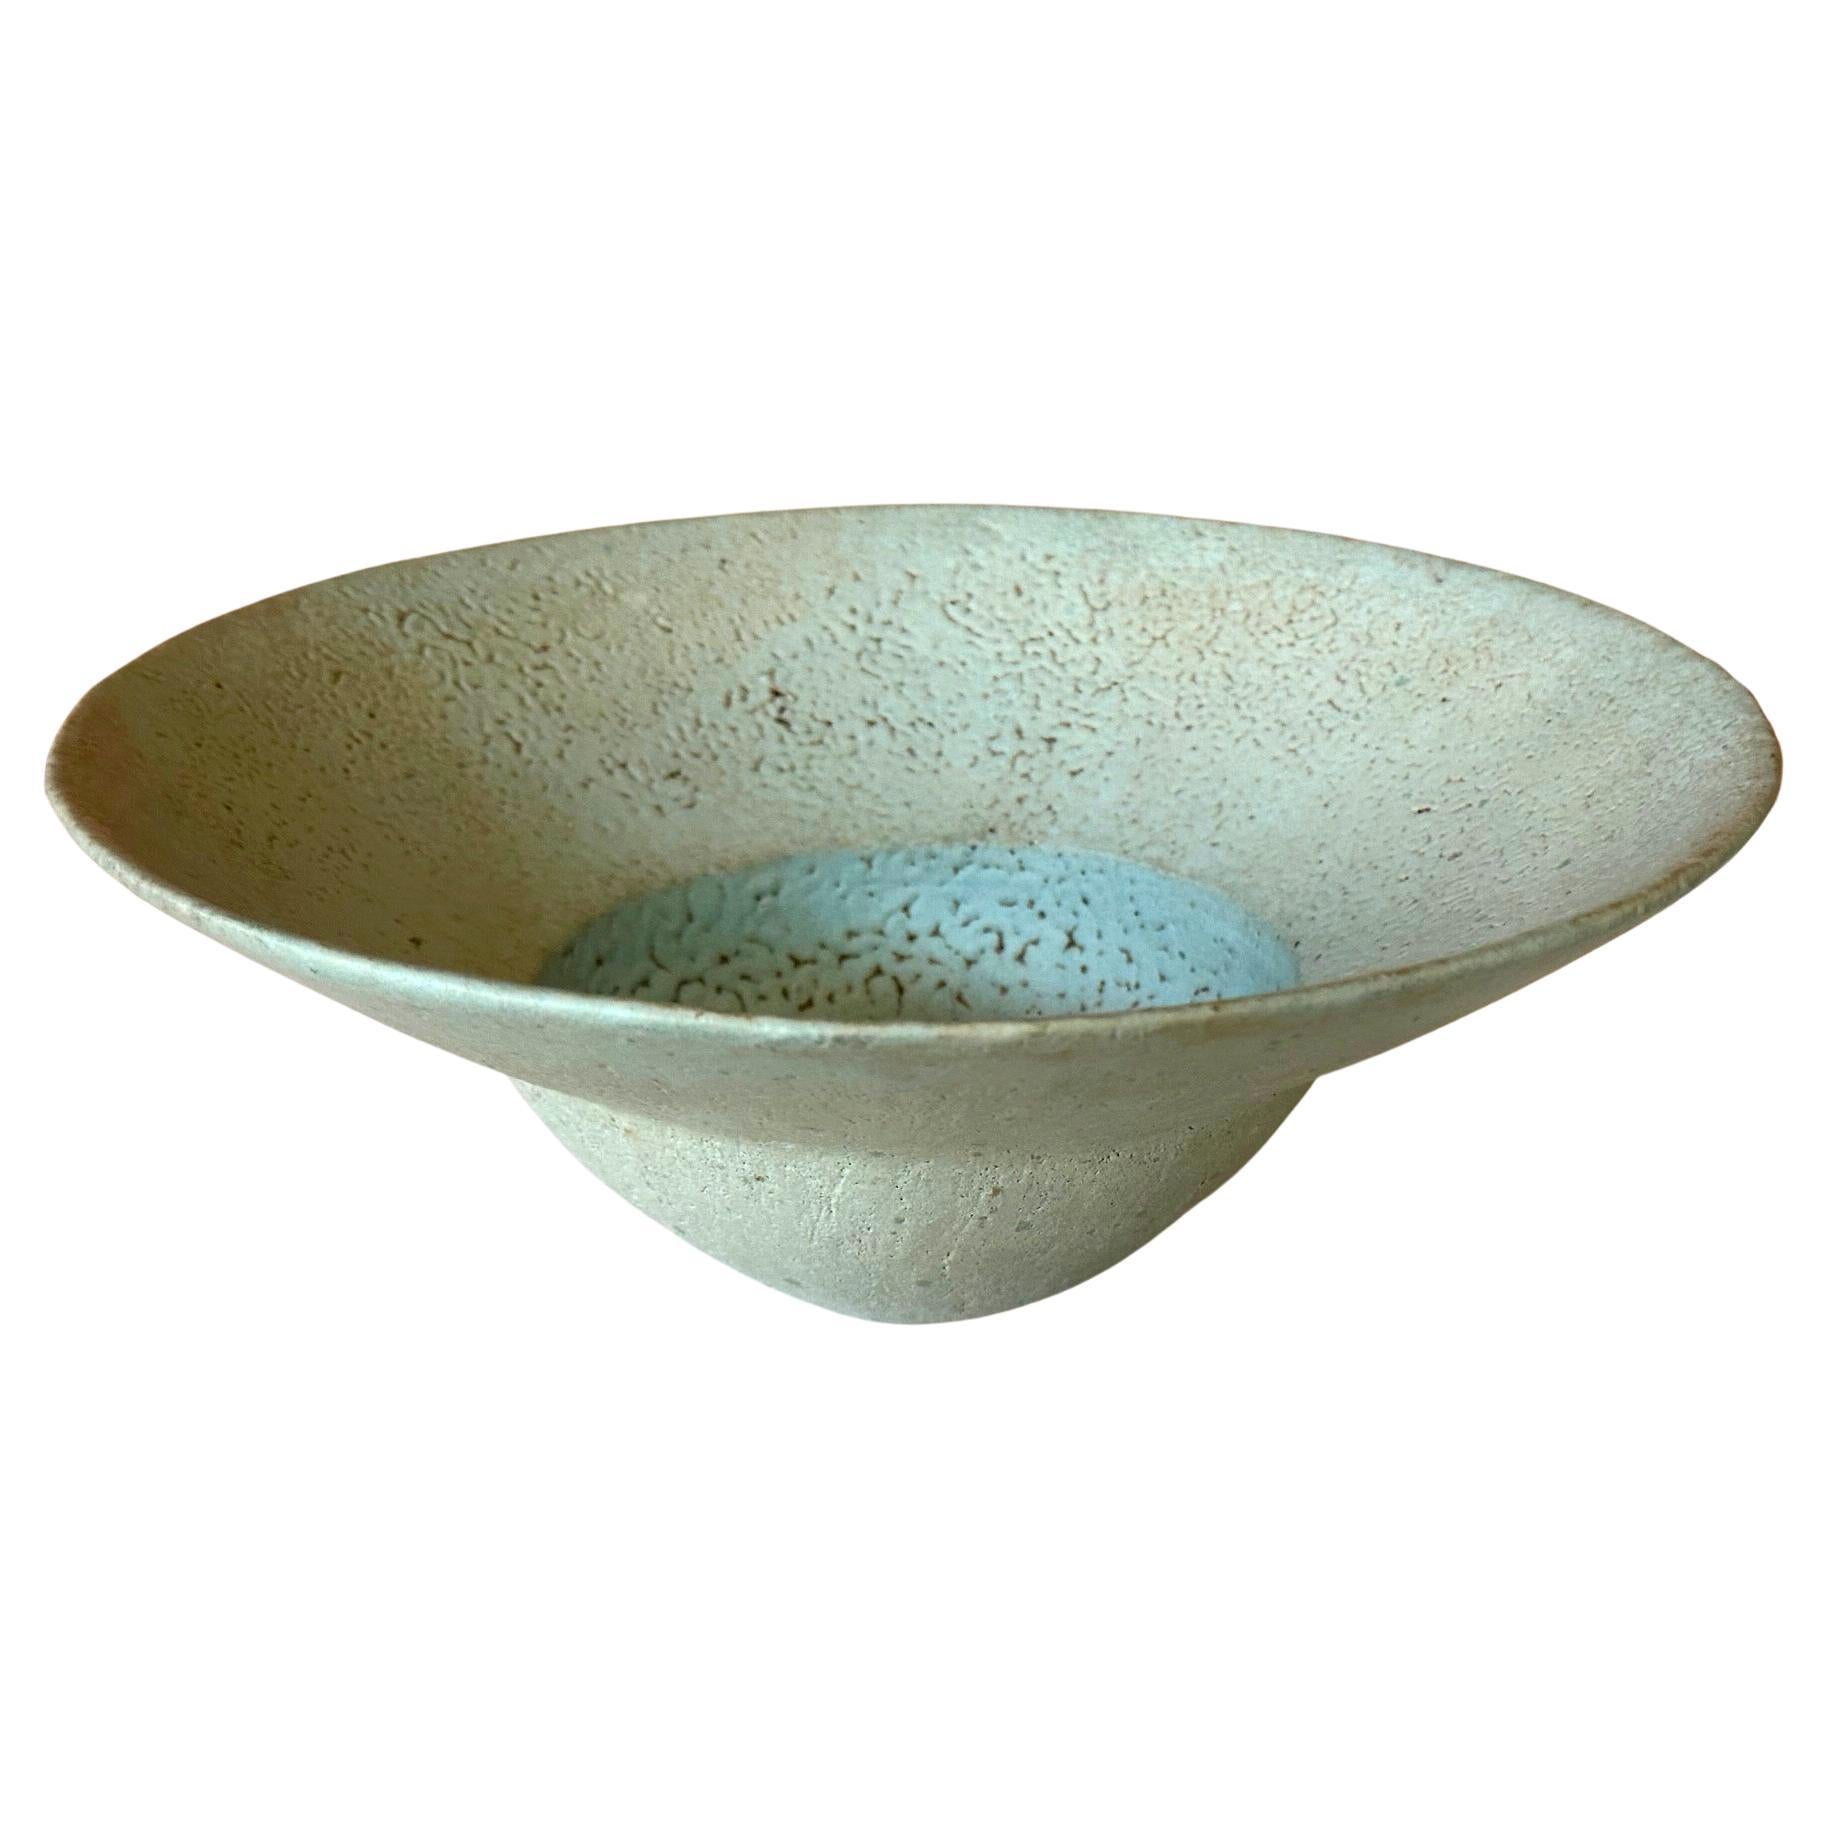 Ceramic Bowl with Flanged Rim by John Ward